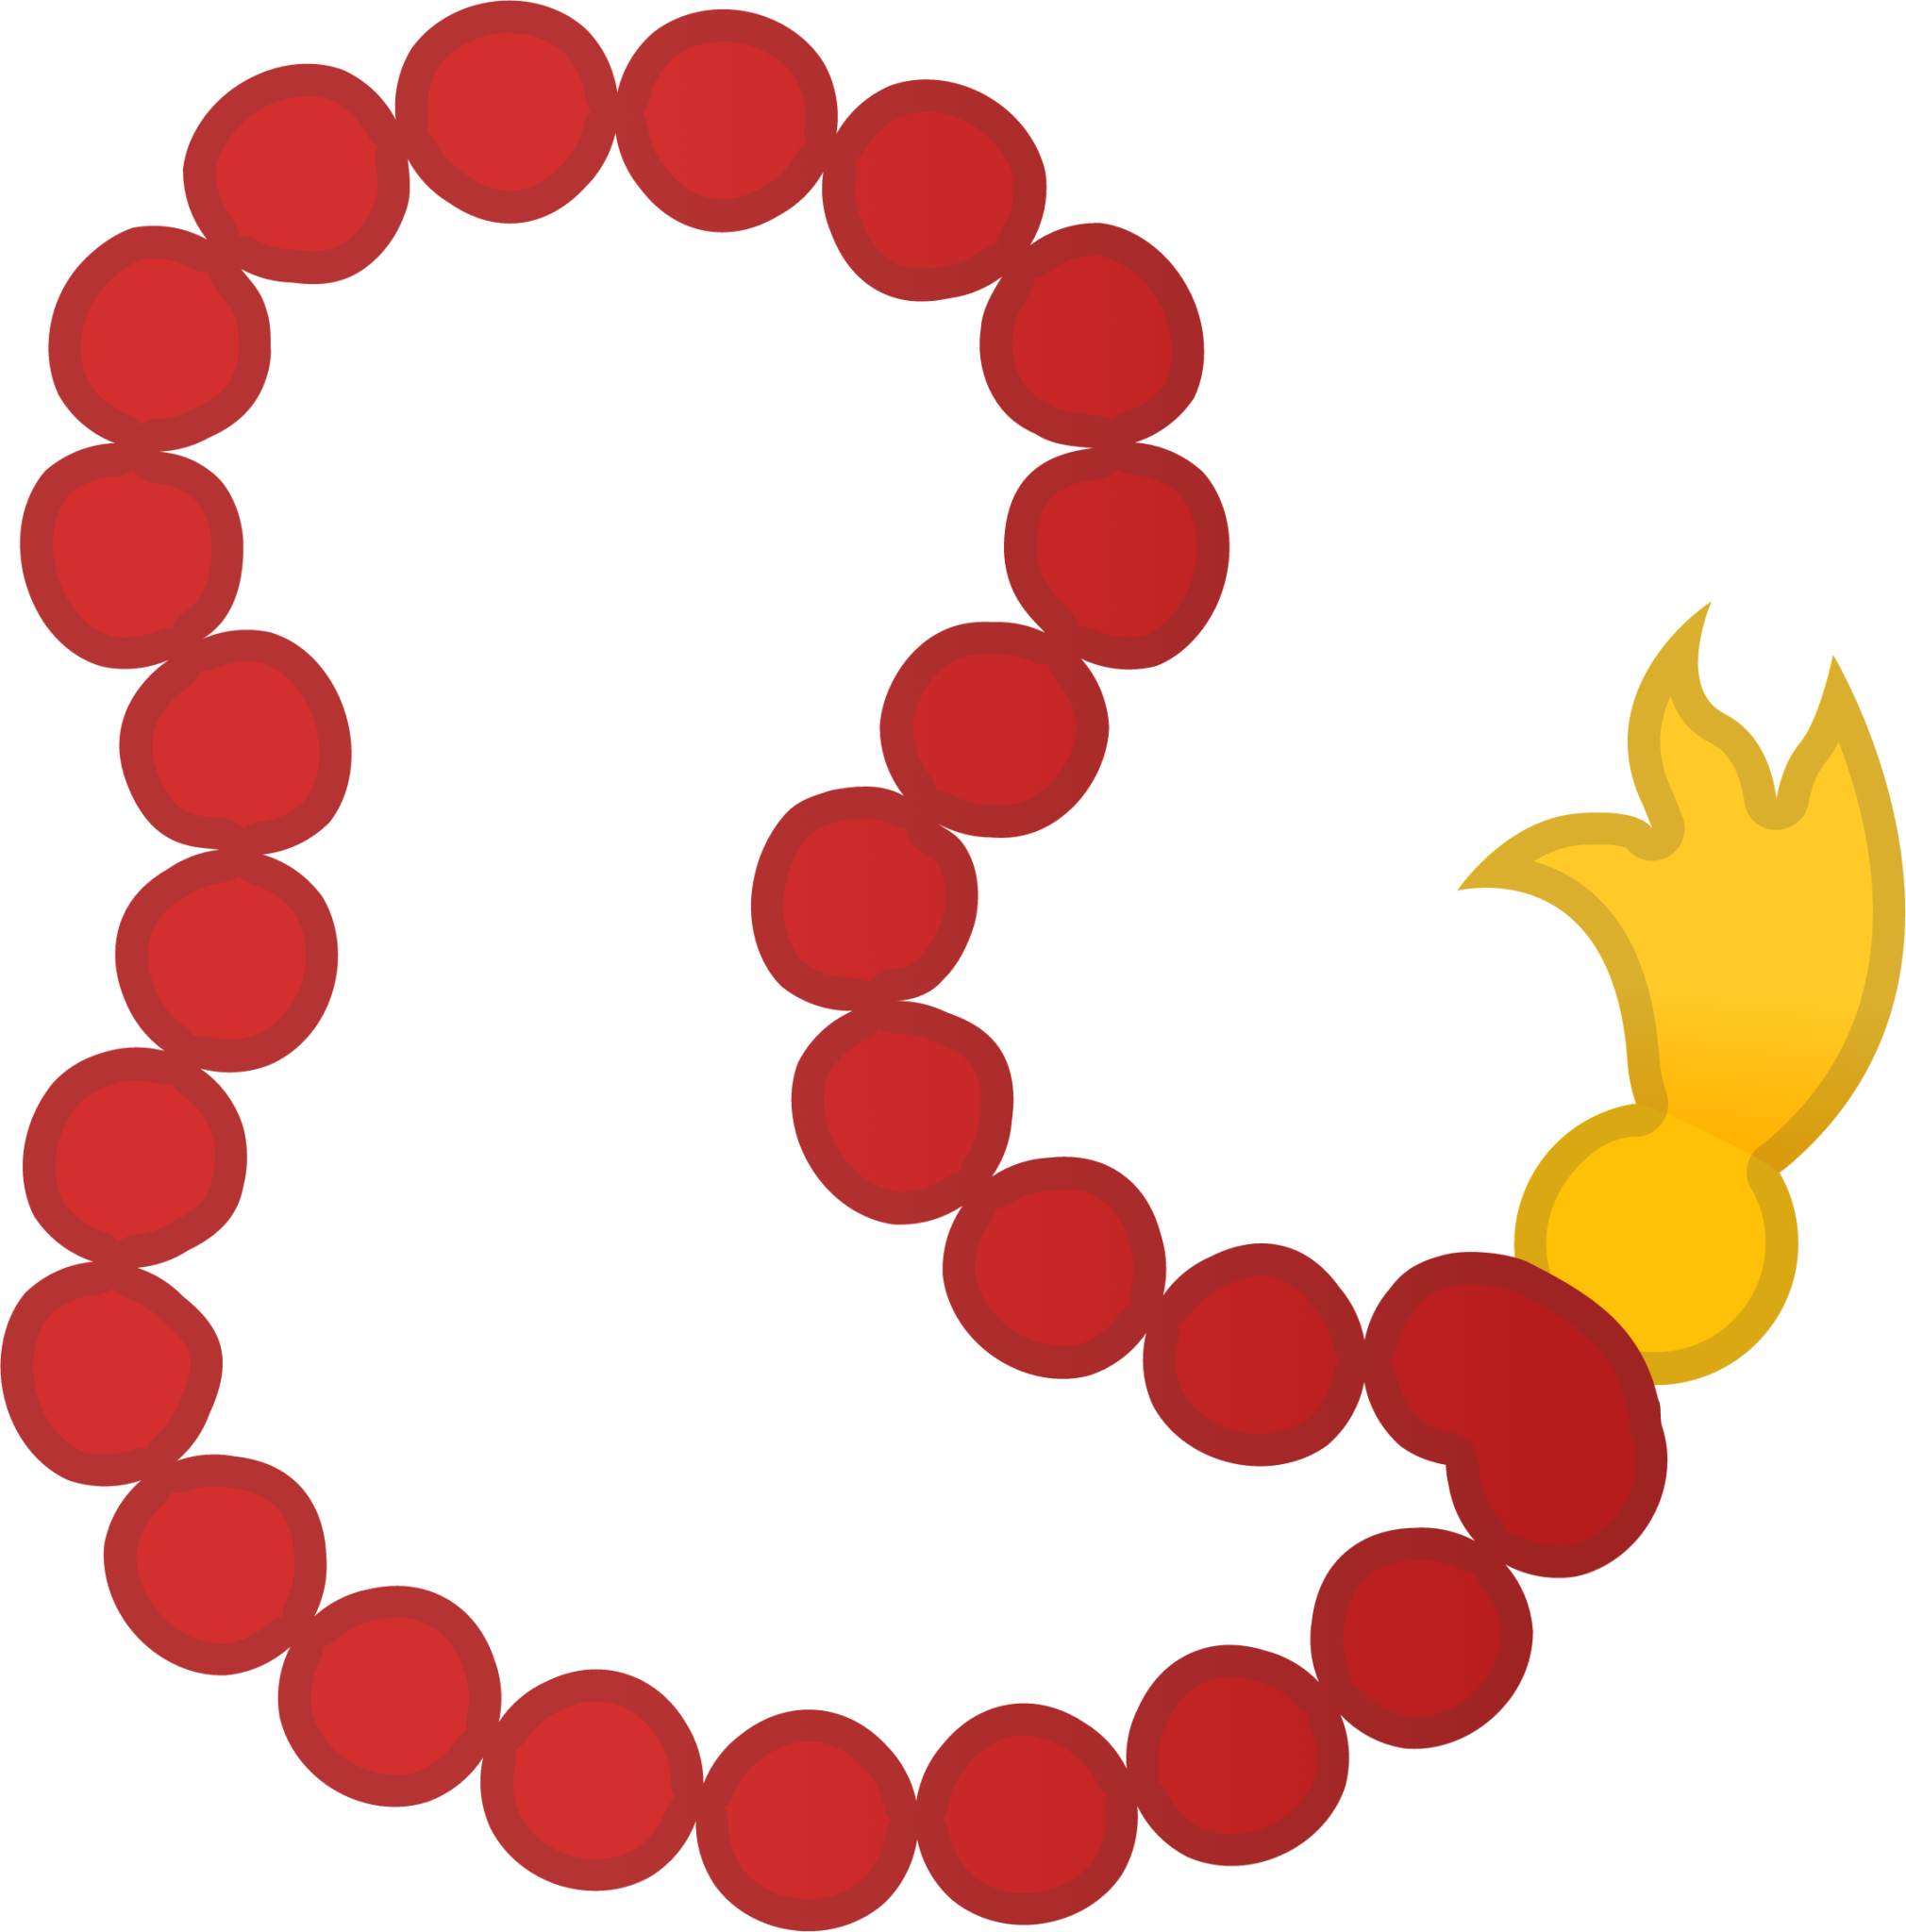 prayer beads emoji